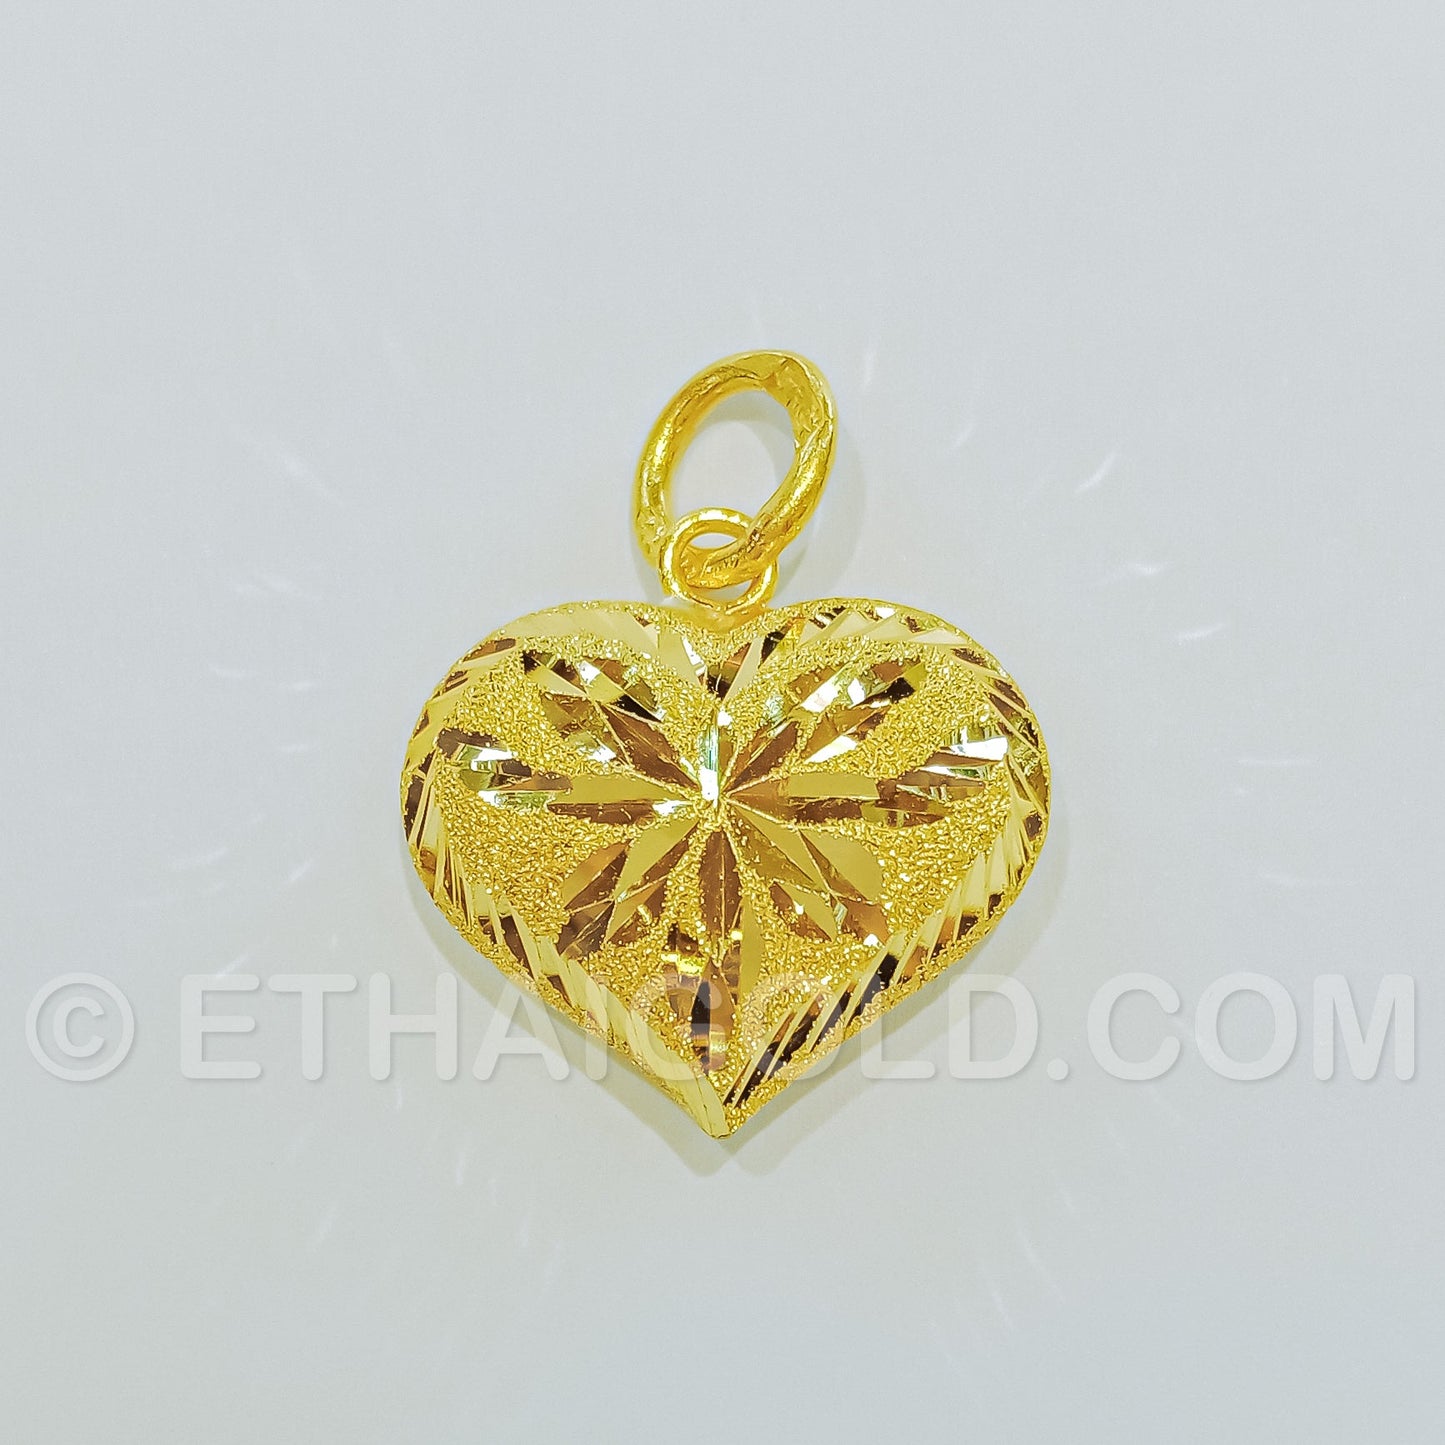 1/8 BAHT SPARKLING DIAMOND-CUT HOLLOW HEART PENDANT IN 23K GOLD (ID: P010HS)